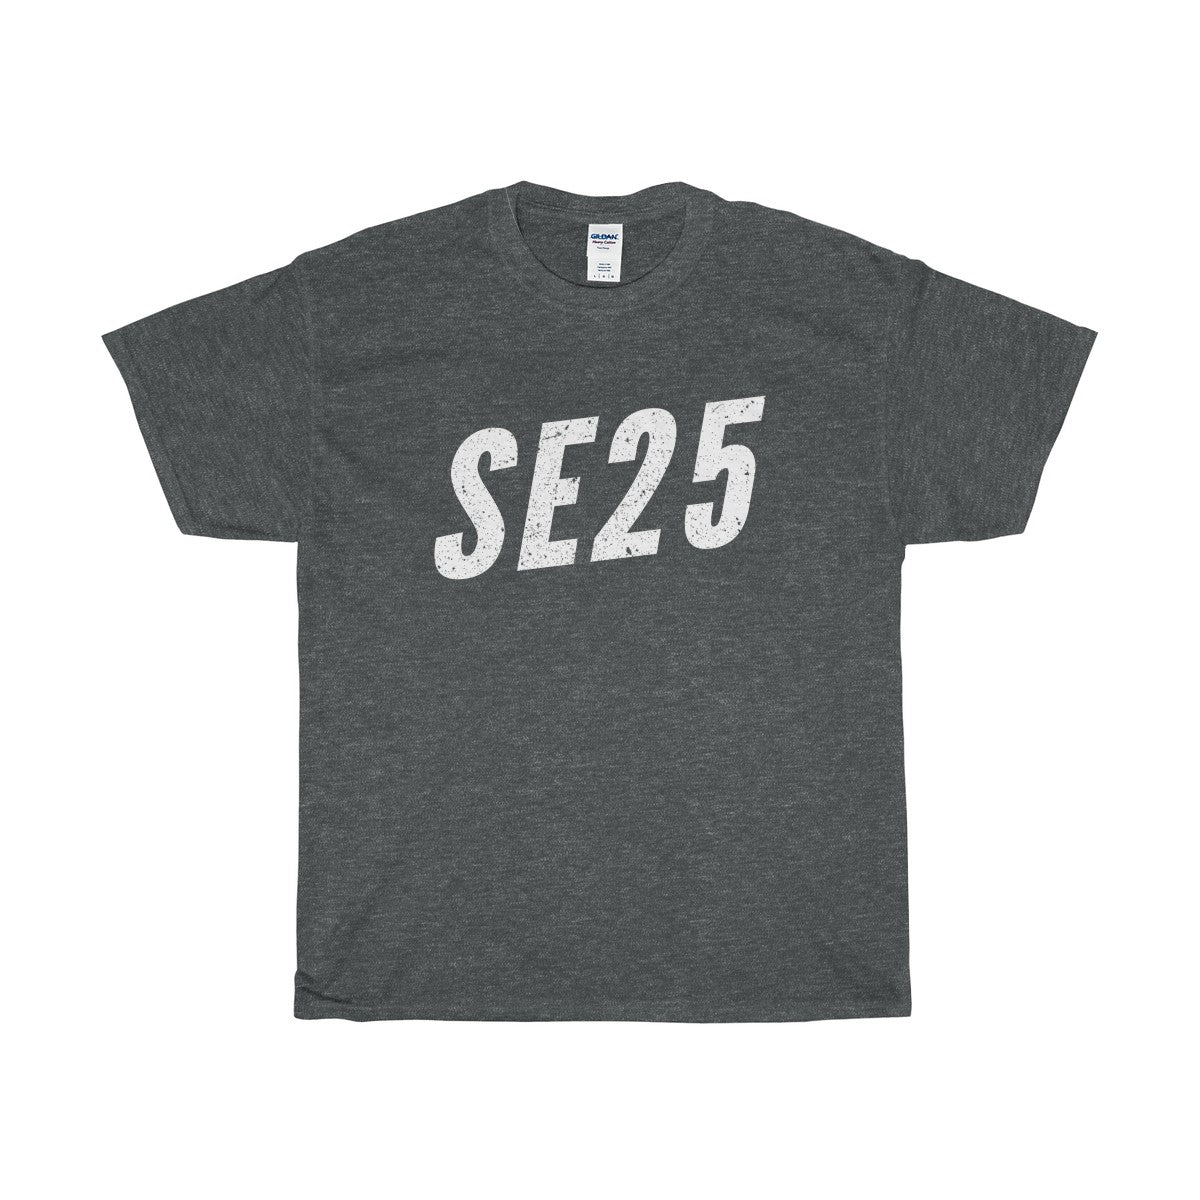 South Norwood SE25 T-Shirt